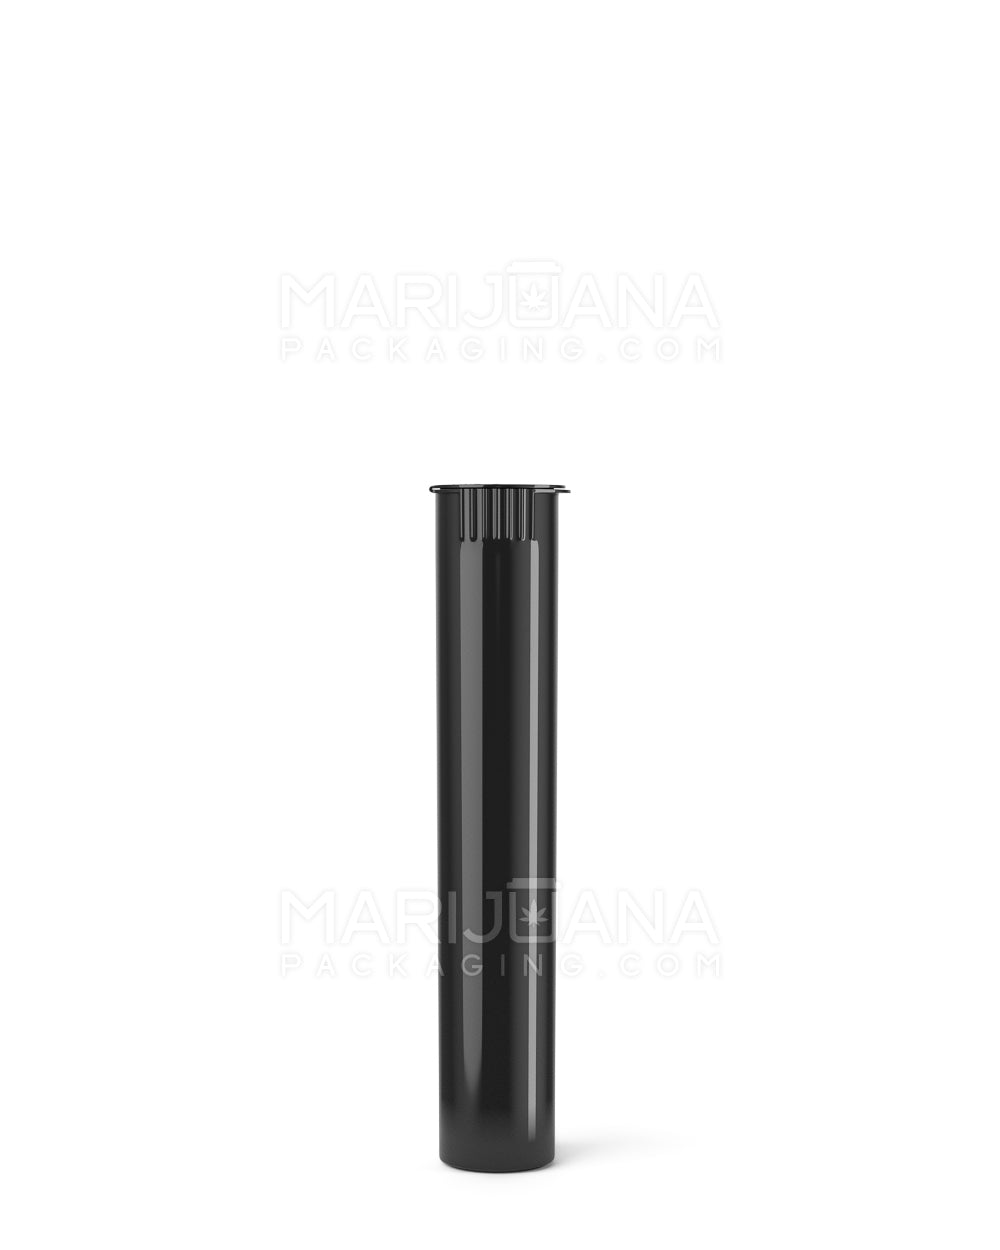 Child Resistant Pop Top Vape Cartridge Tube | 80mm - Black | Sample - 3